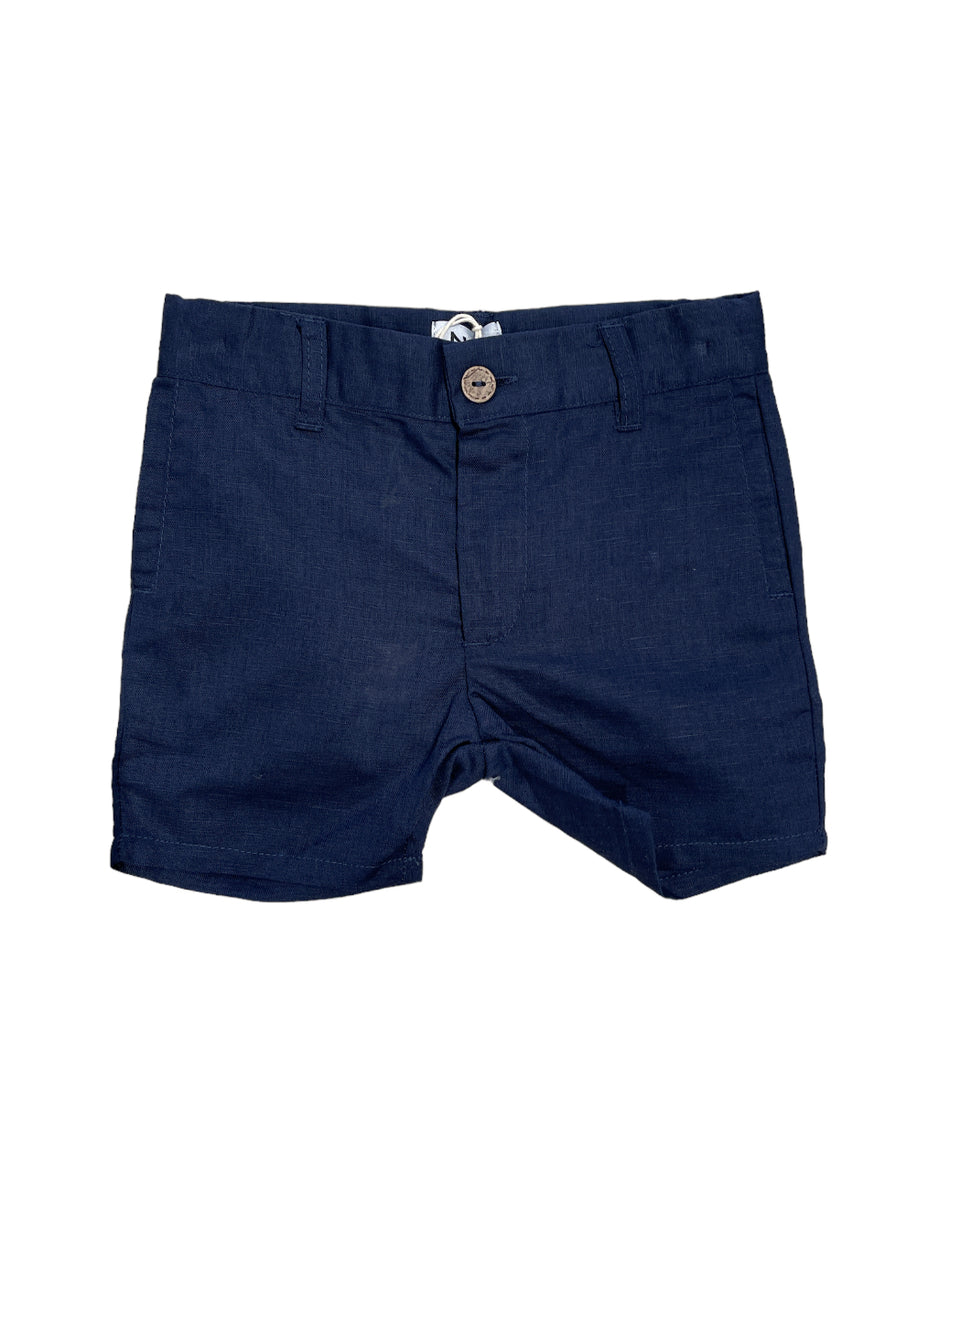 Noma Navy Linen Shorts